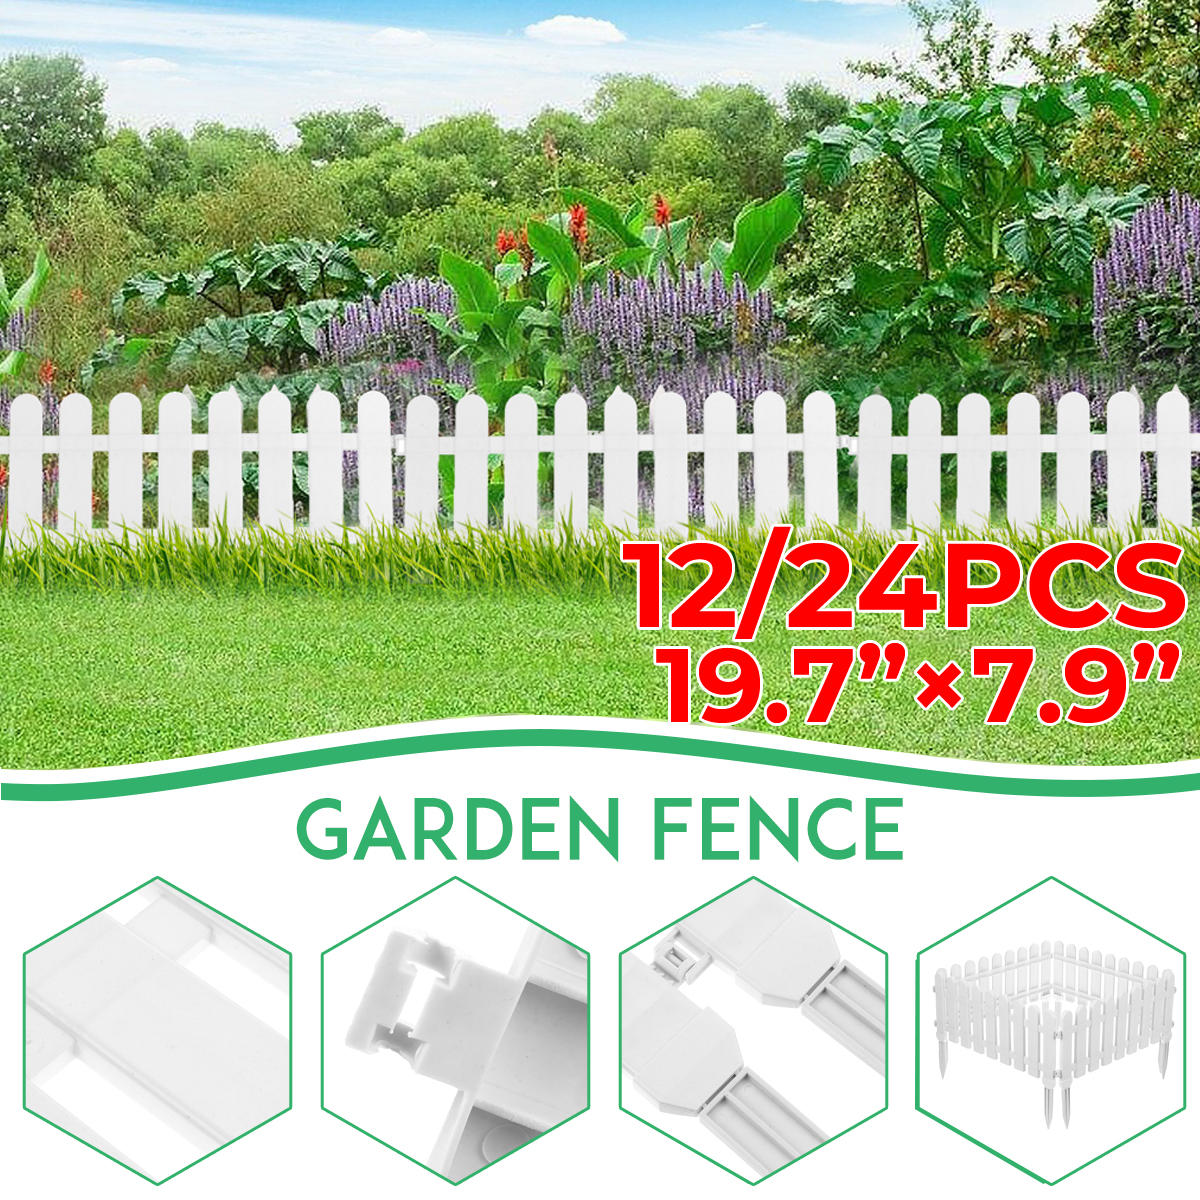 20--40-FT-Plastic-Garden-Border-Fencing-Fence-Pannels-Outdoor-Landscape-Decor-Edging-Yard-12-24-PCS-1959719-7